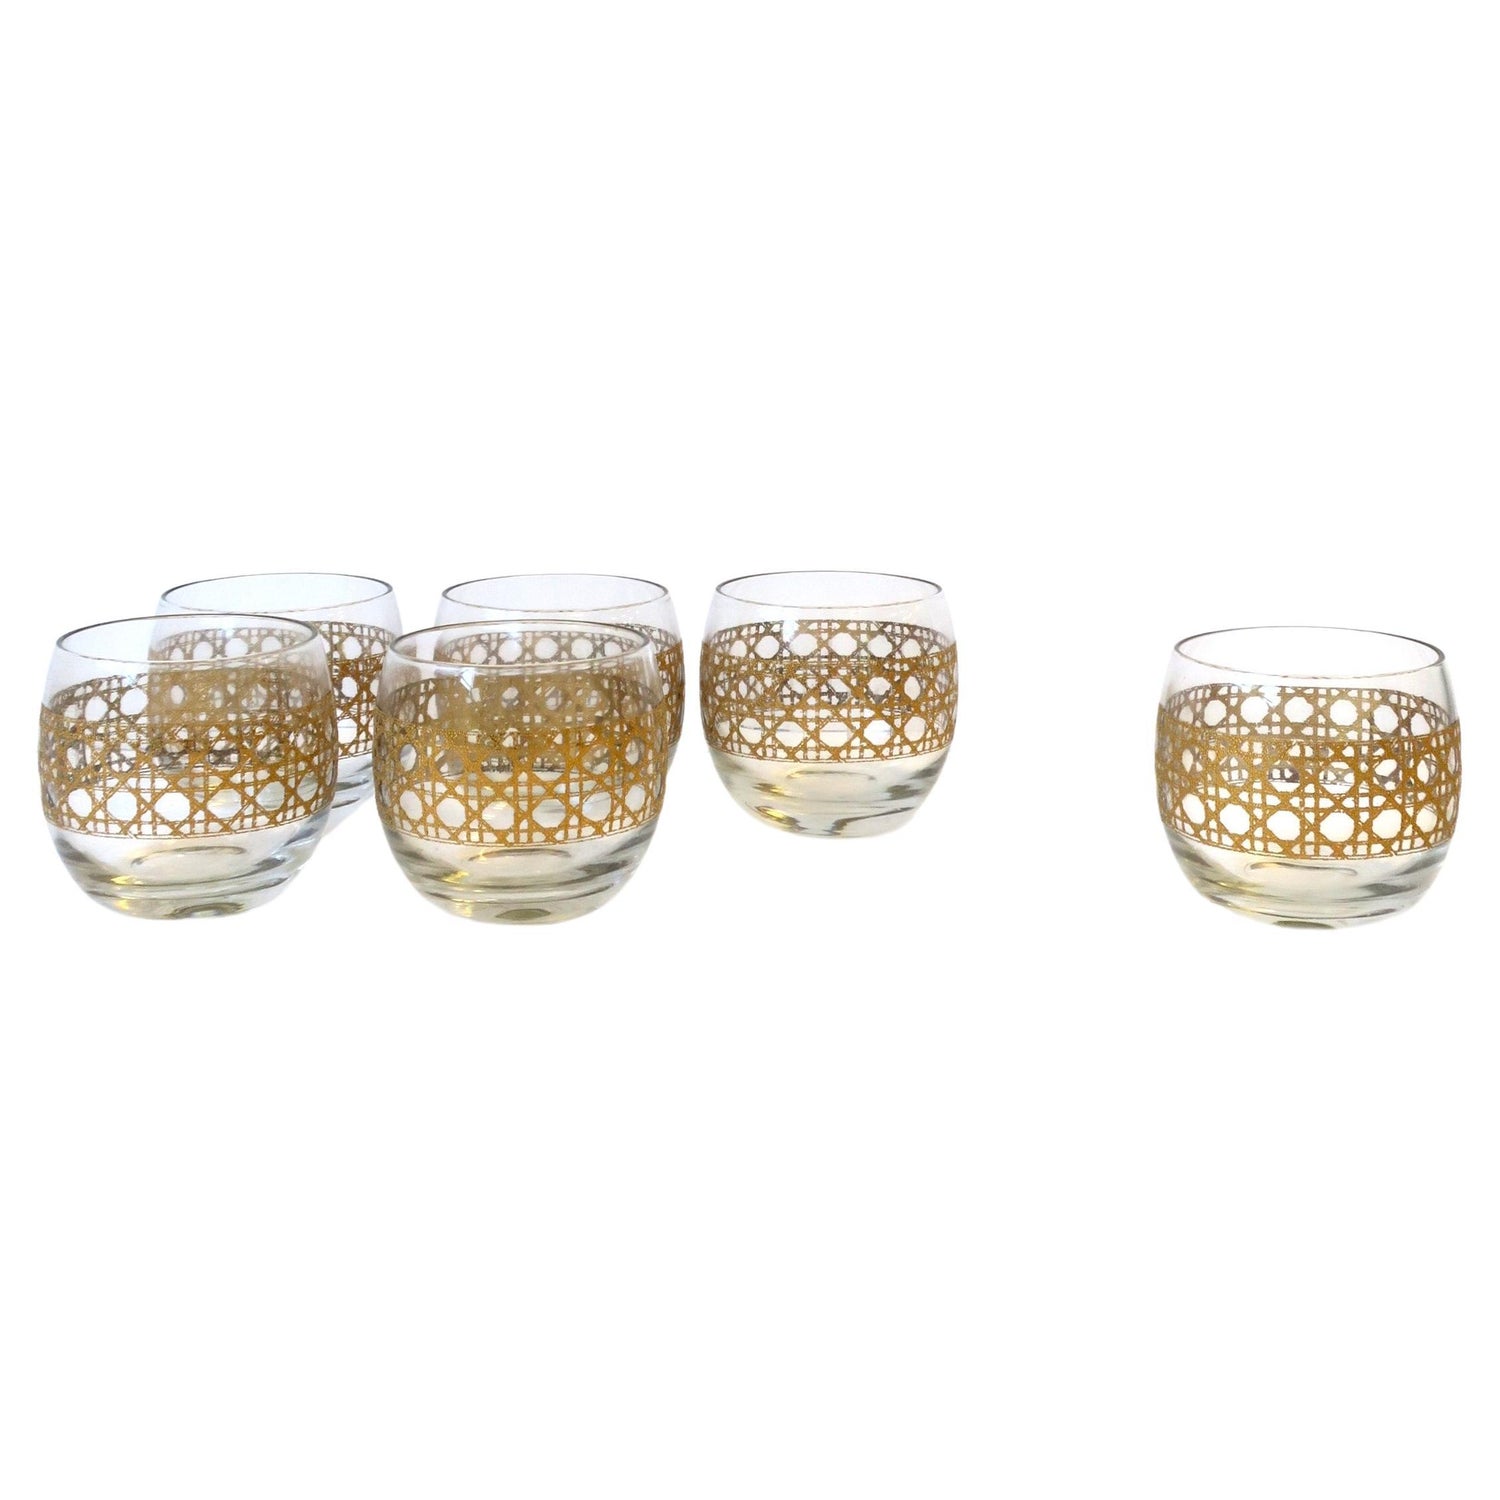 https://a.1stdibscdn.com/gold-wicker-cane-tumbler-cocktail-rocks-glasses-set-of-6-for-sale/f_13142/f_293427821656469106226/f_29342782_1656469106692_bg_processed.jpg?width=1500